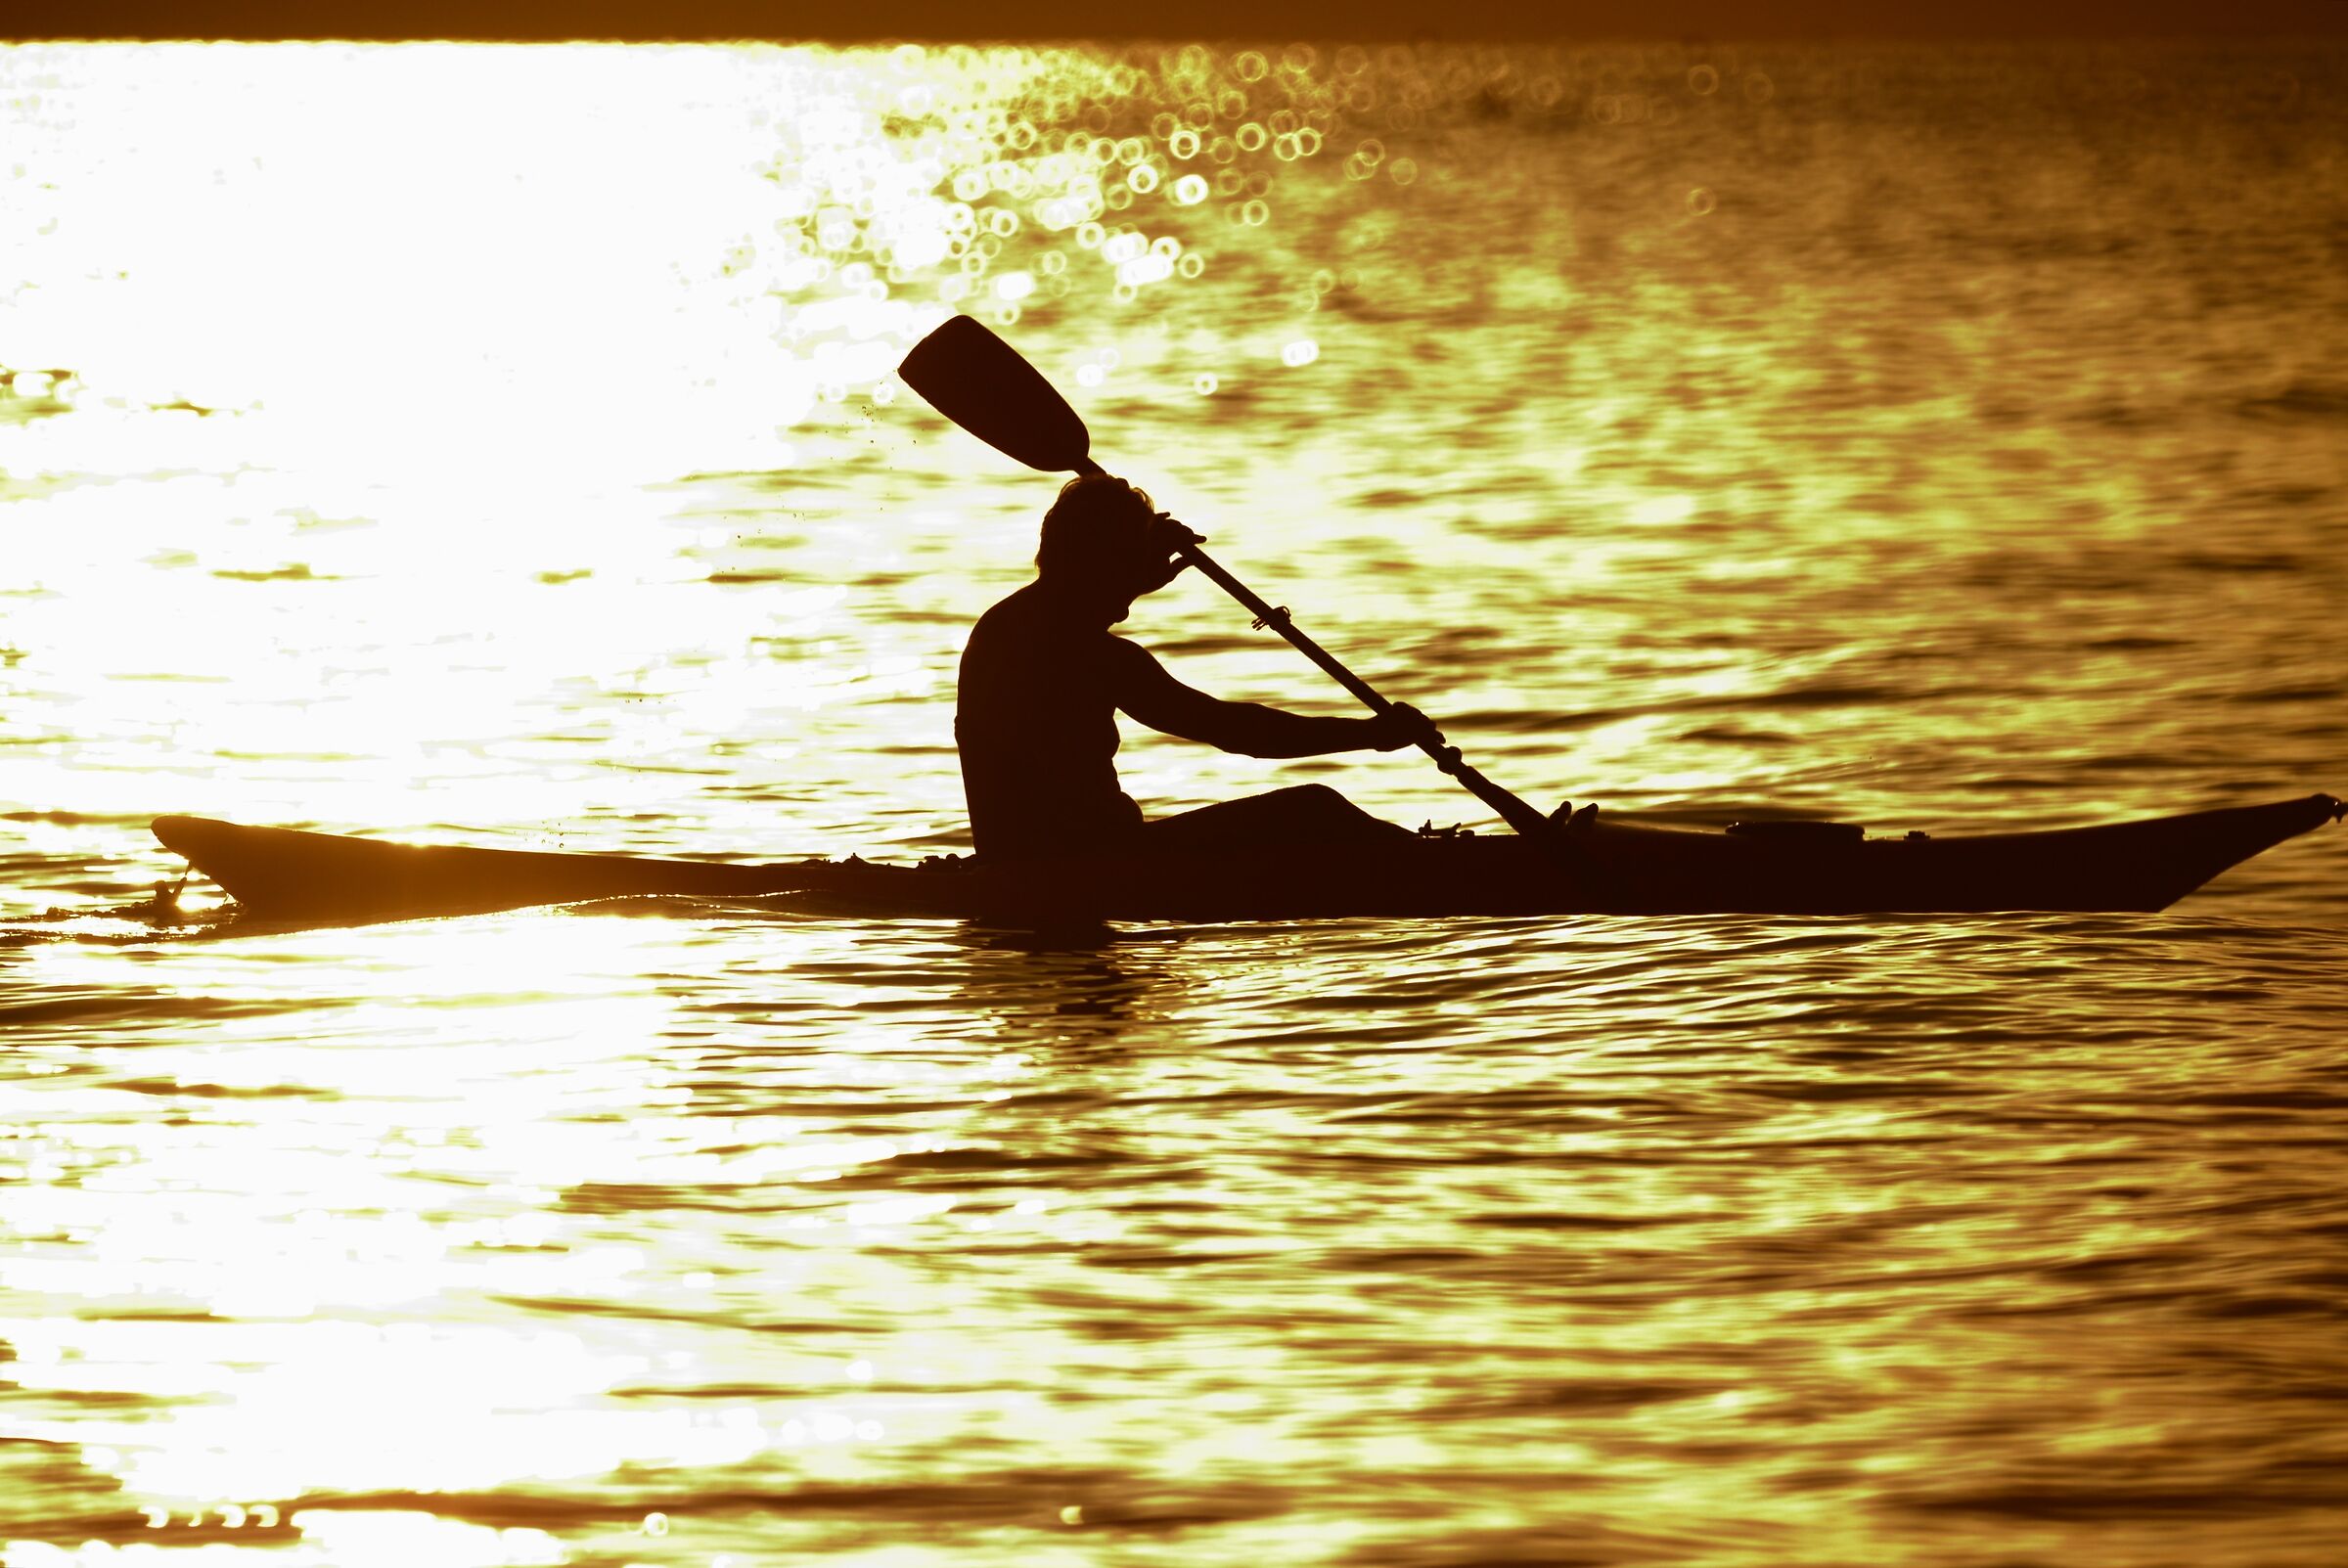 At dawn in a canoe ...